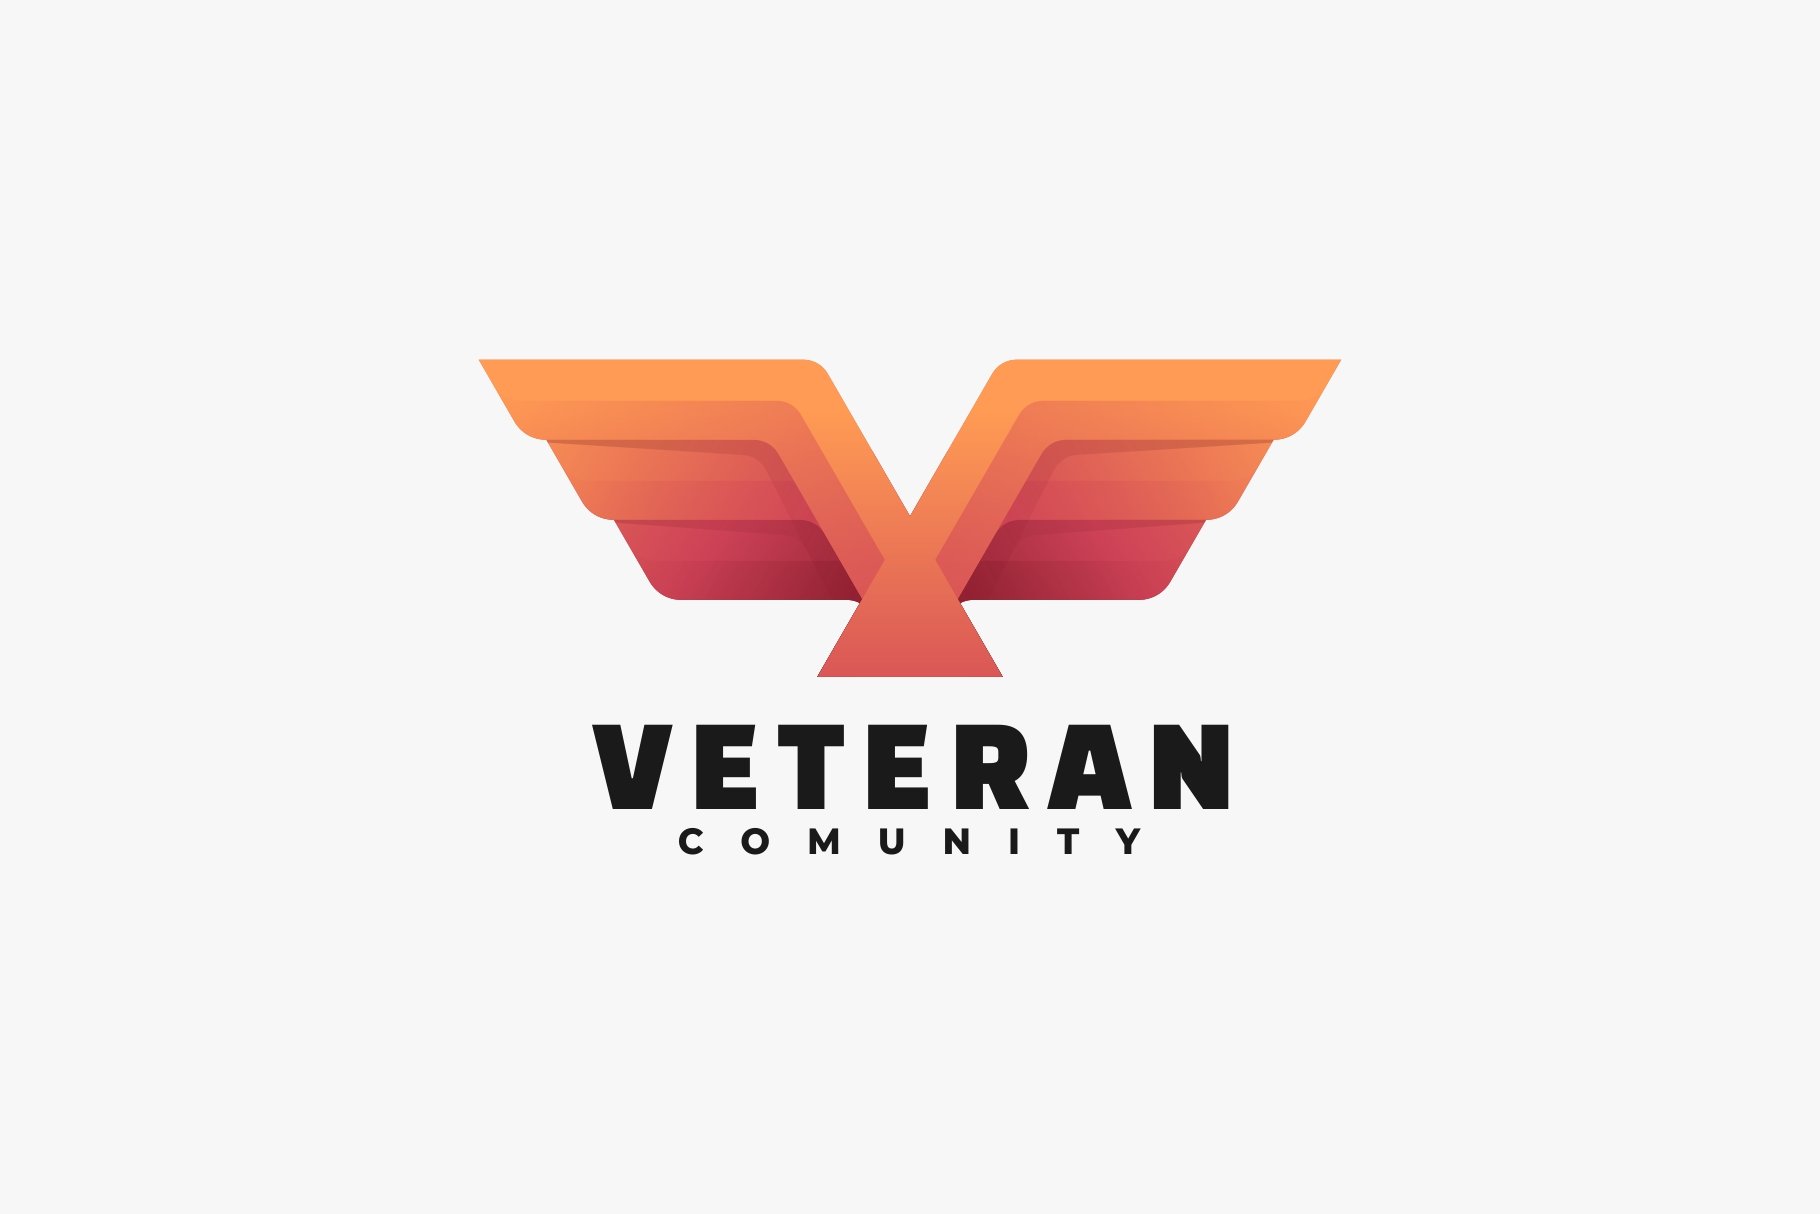 Veteran Gradient Logo cover image.